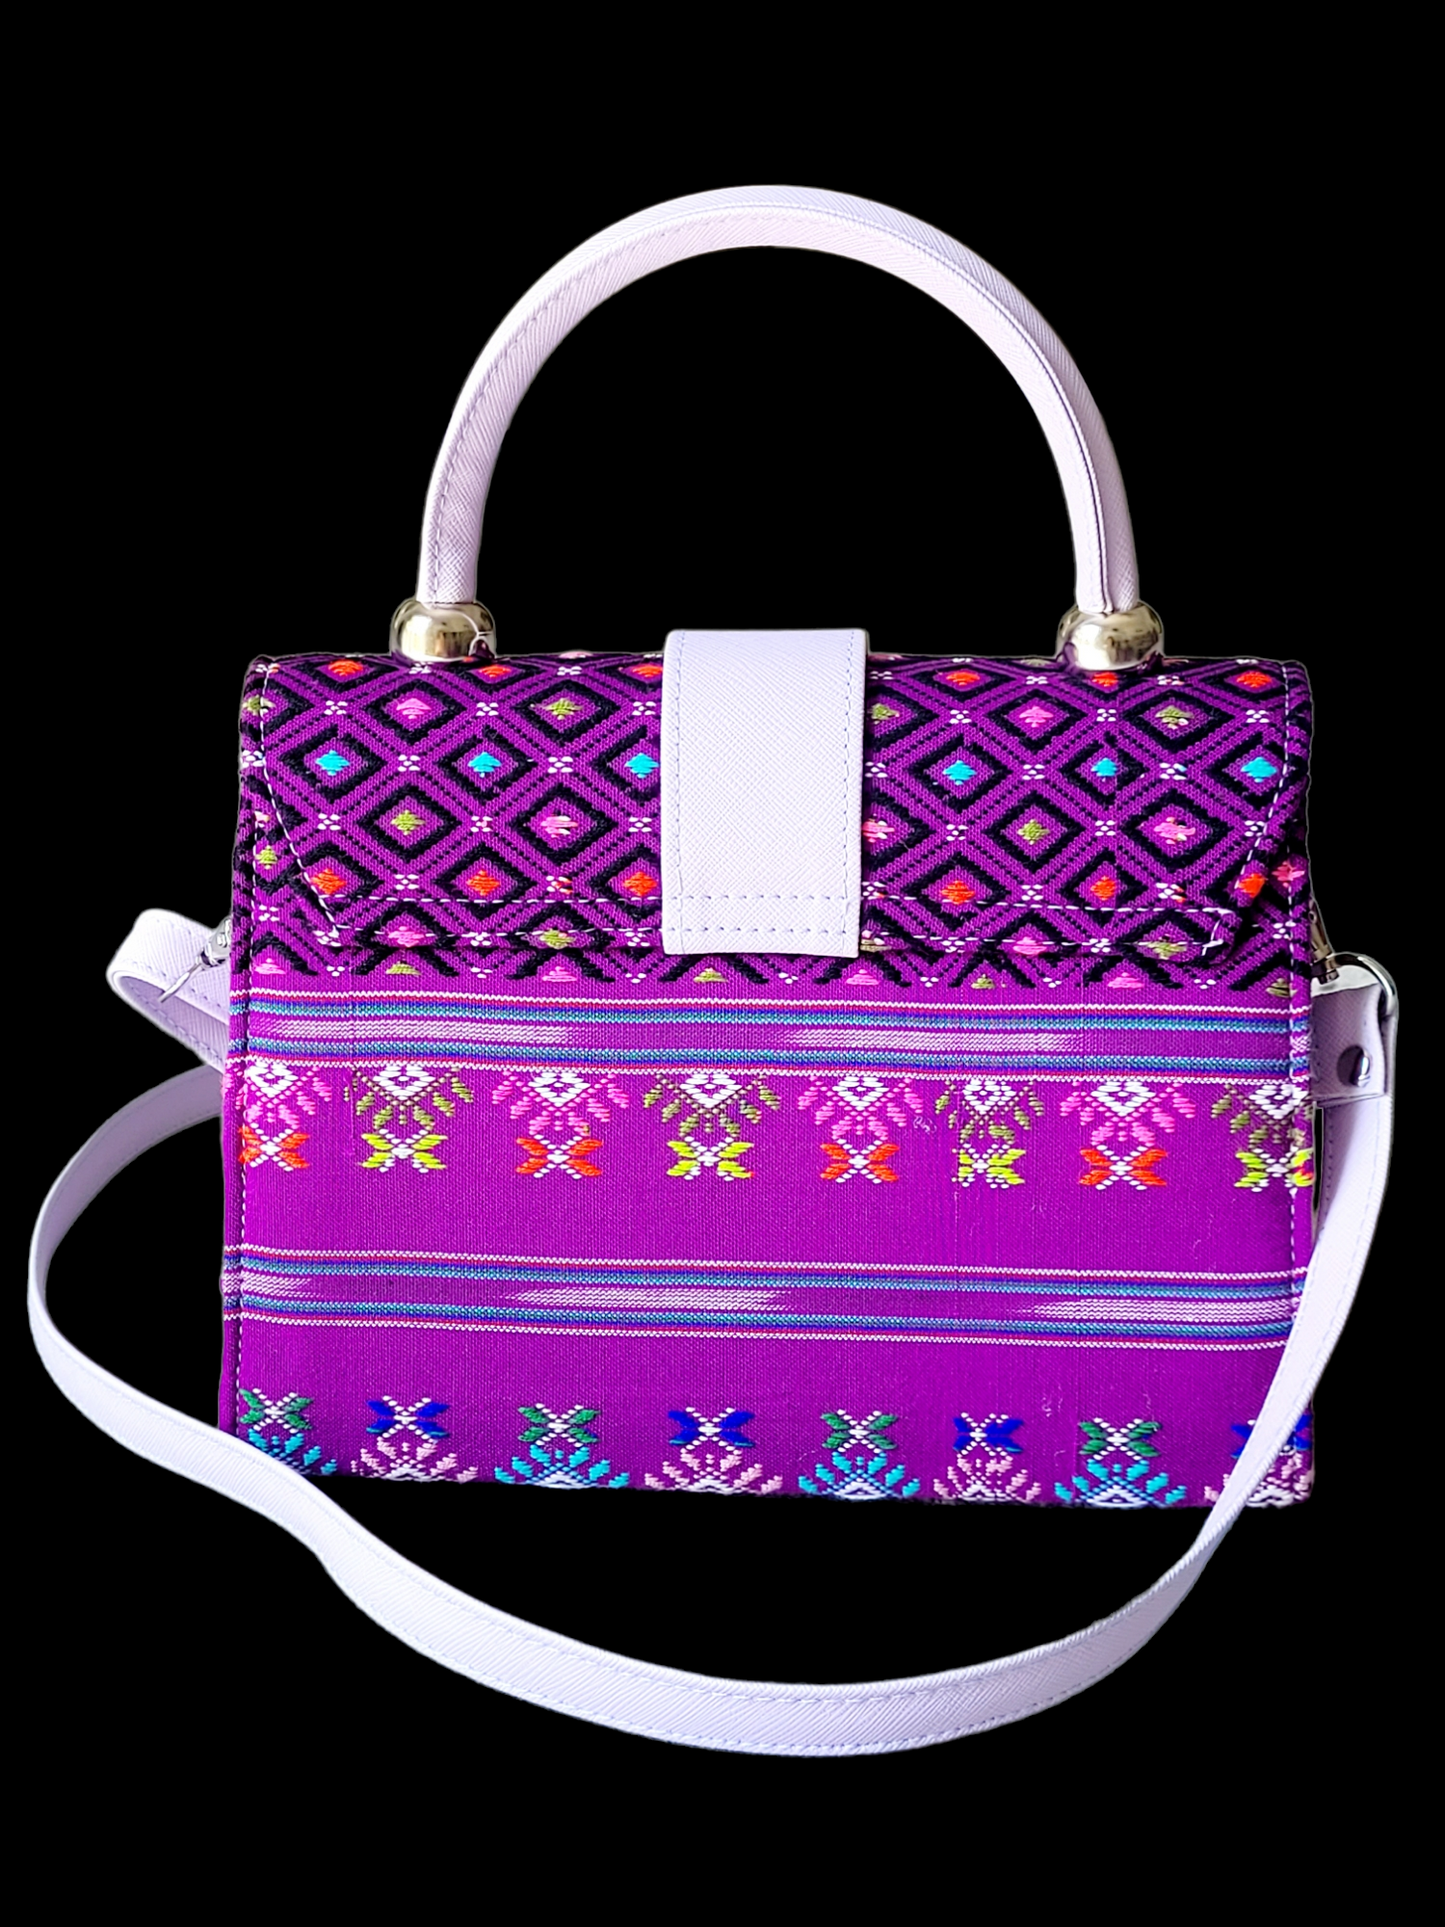 Geometric Design 1 Handbags